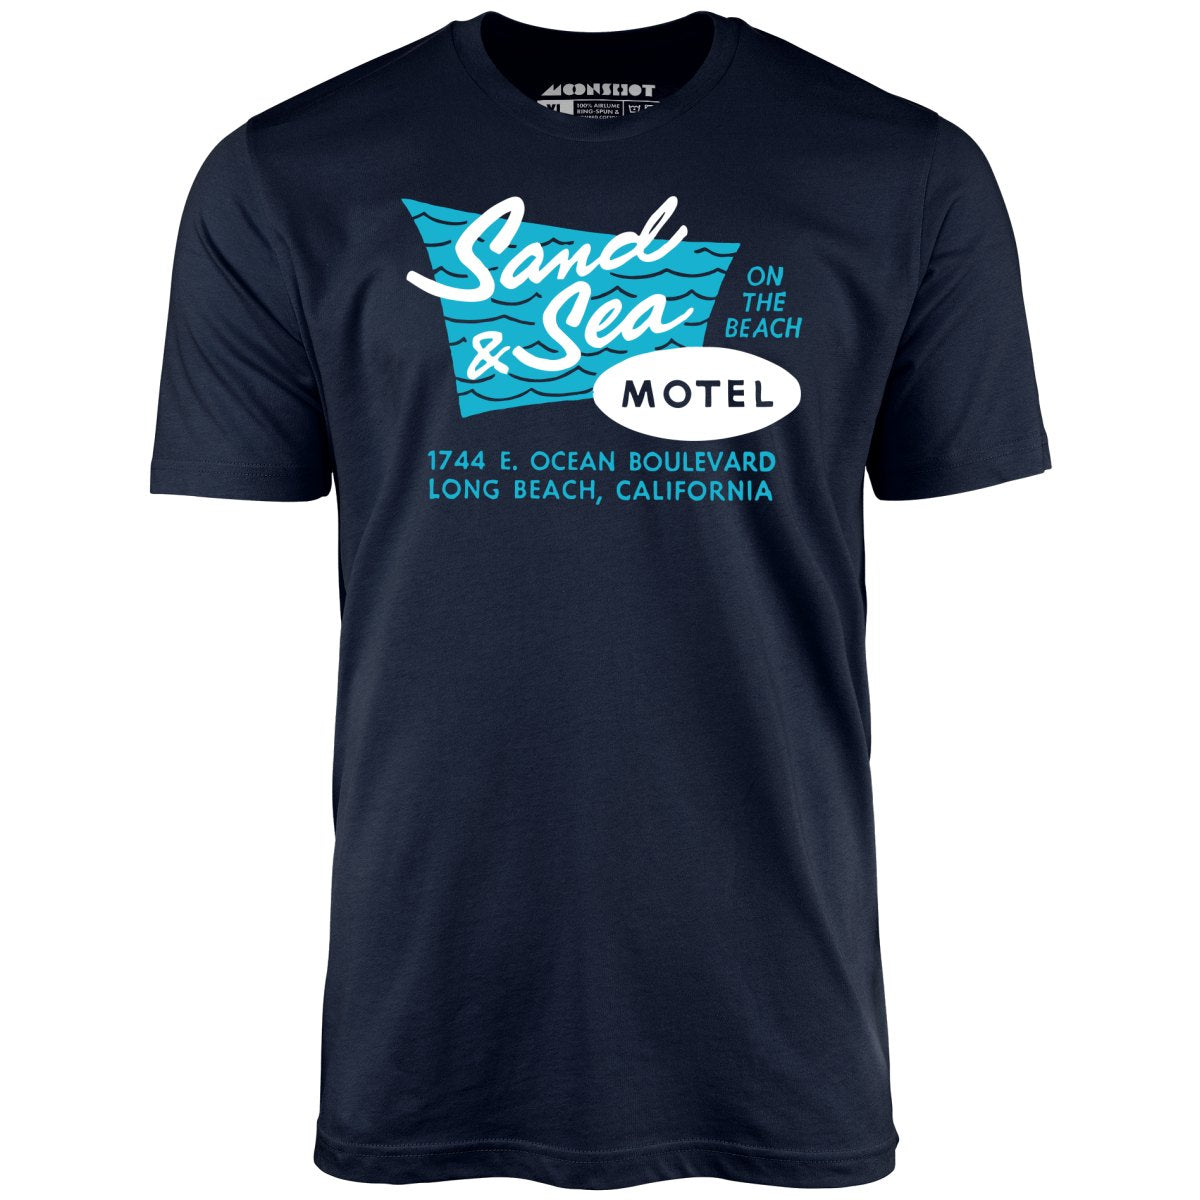 Sand & Sea Motel - Long Beach, CA - Vintage Motel - Unisex T-Shirt